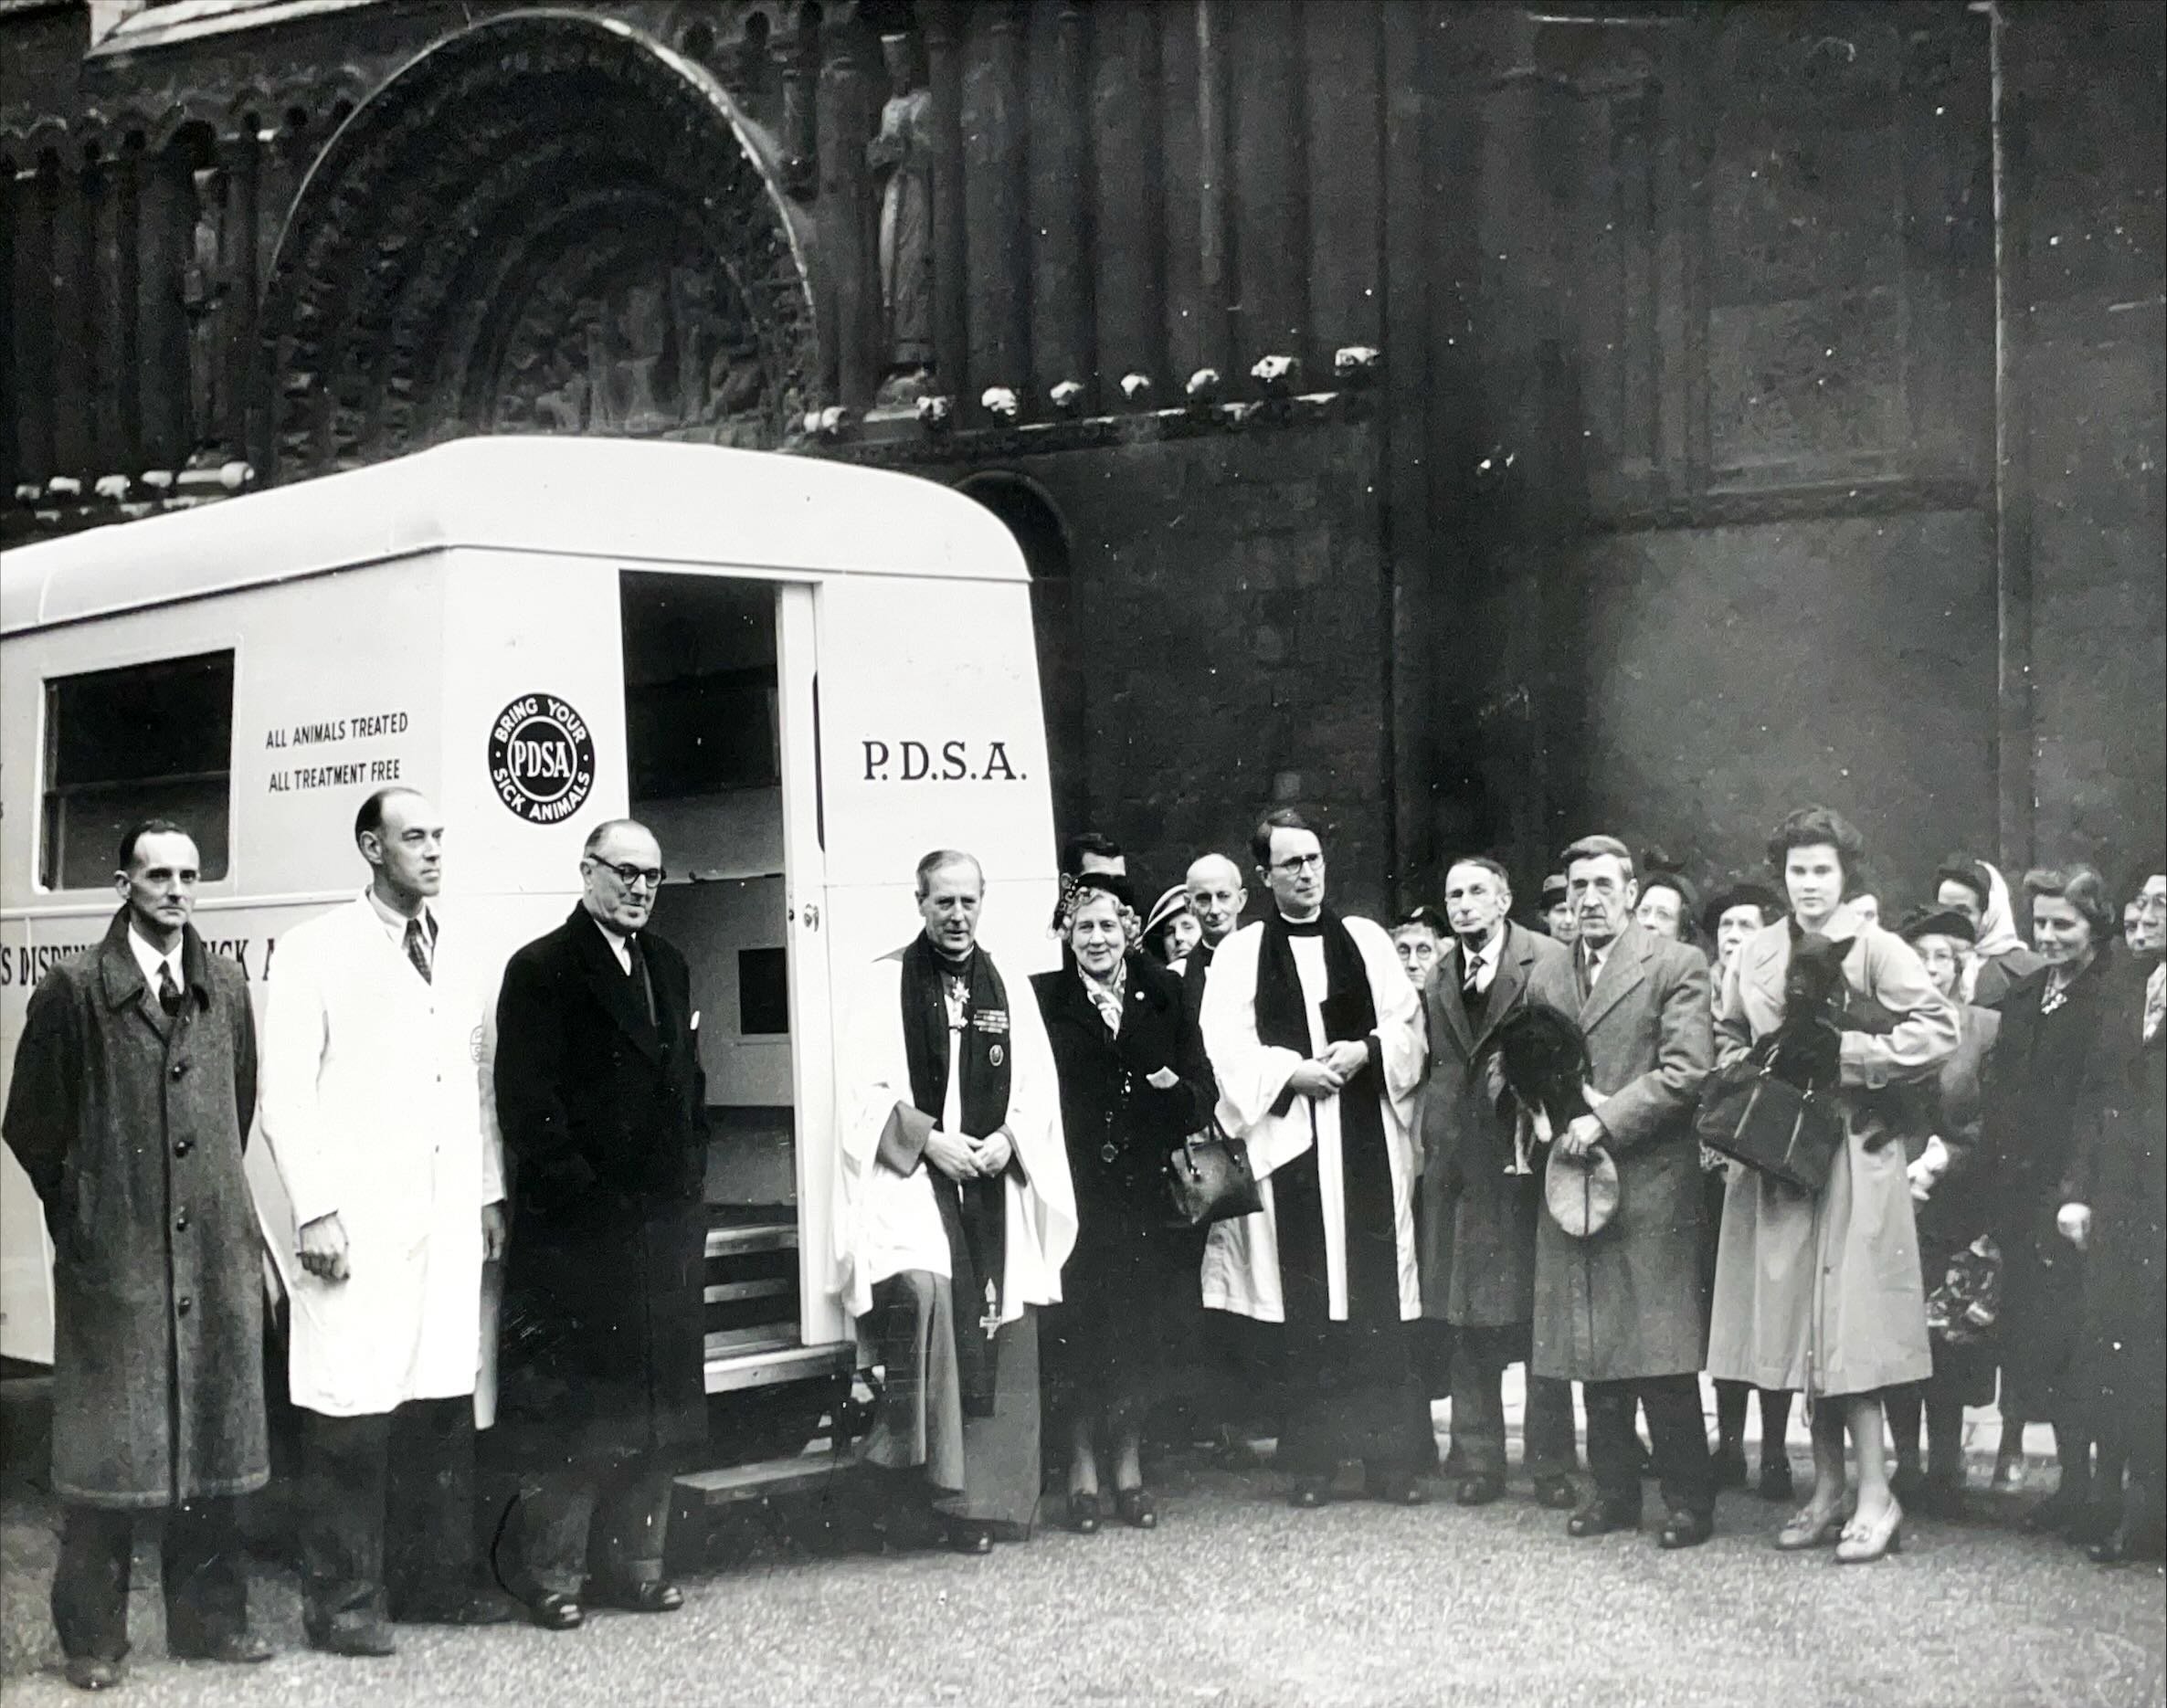 PDSA mobile dispensary after dedication by dean, November 1950